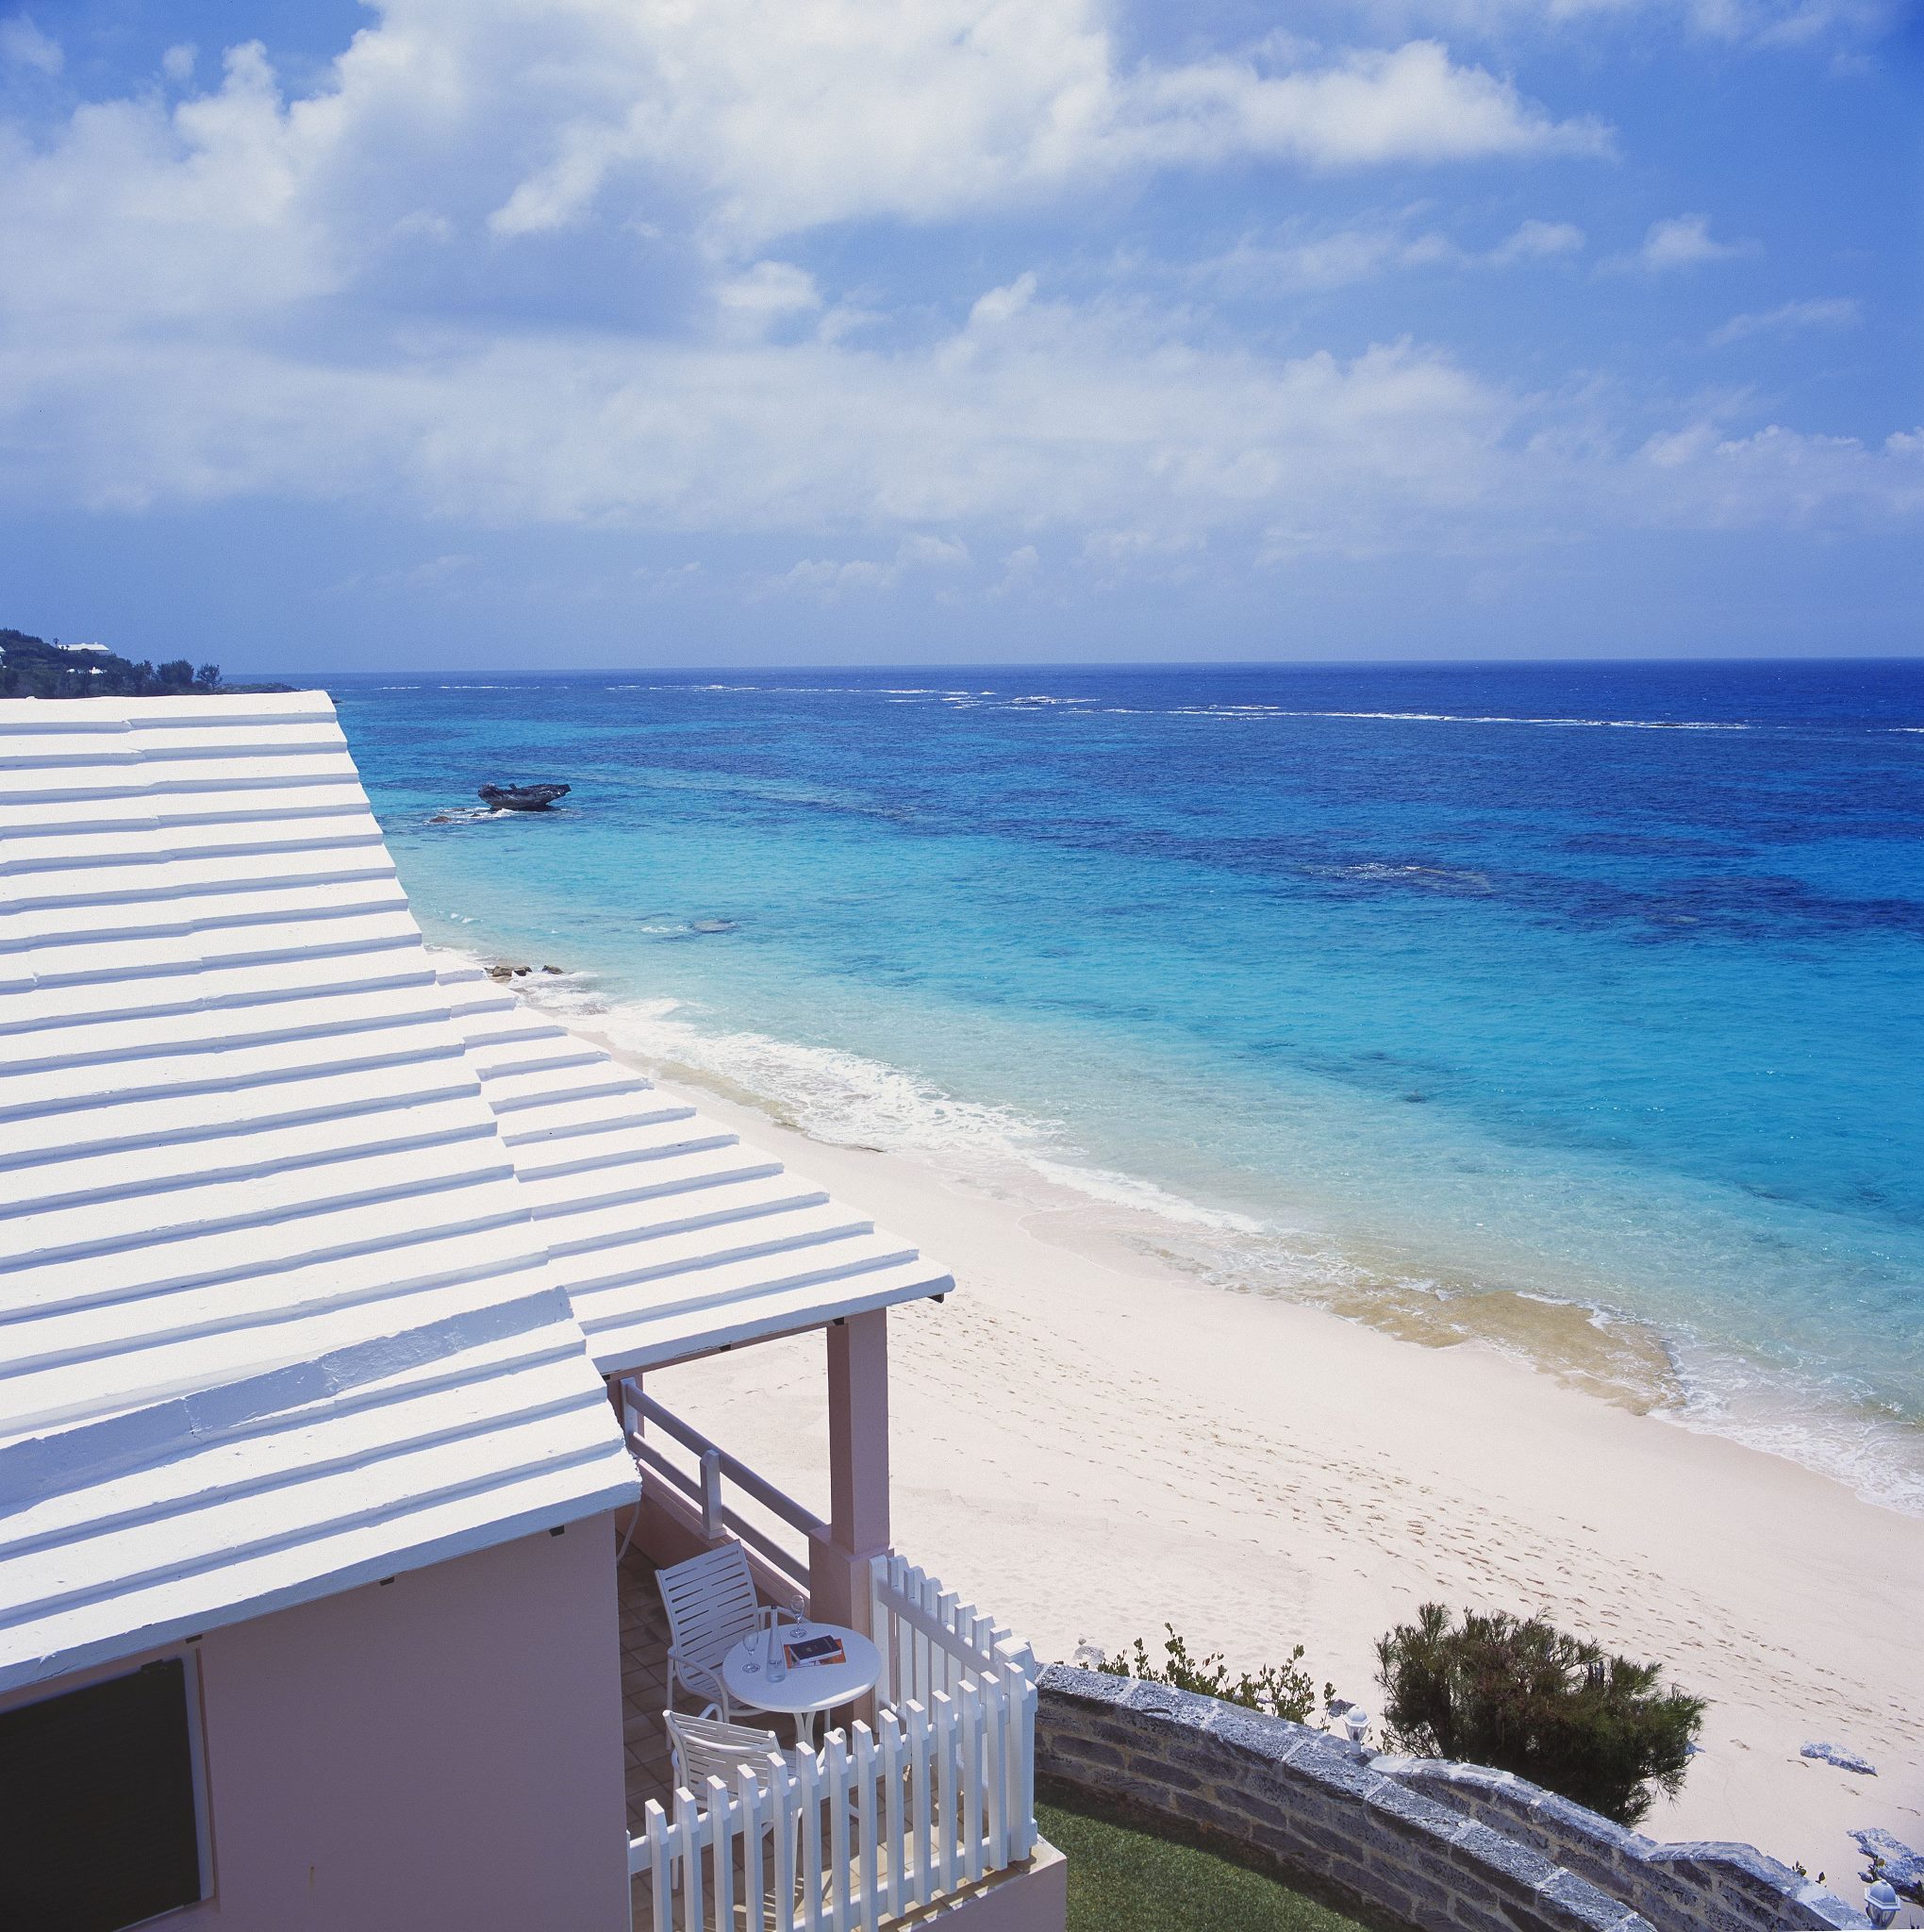 The Pink Beach Club 》 Bermuda » restaurant menu ⓵, photos ※, reviews √